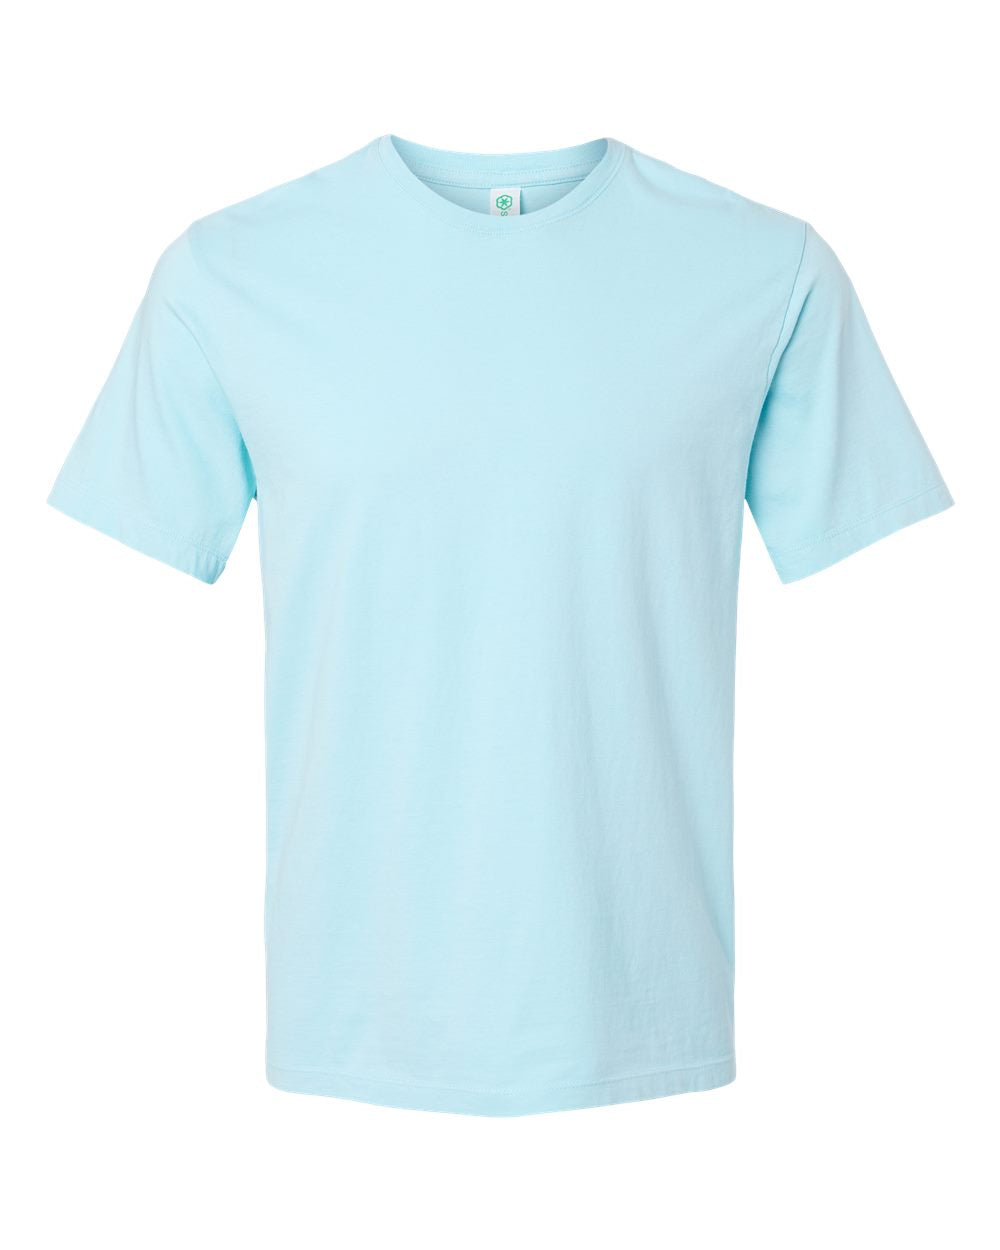 Softshirts® Unisex Organic Cotton T-shirt in light blue